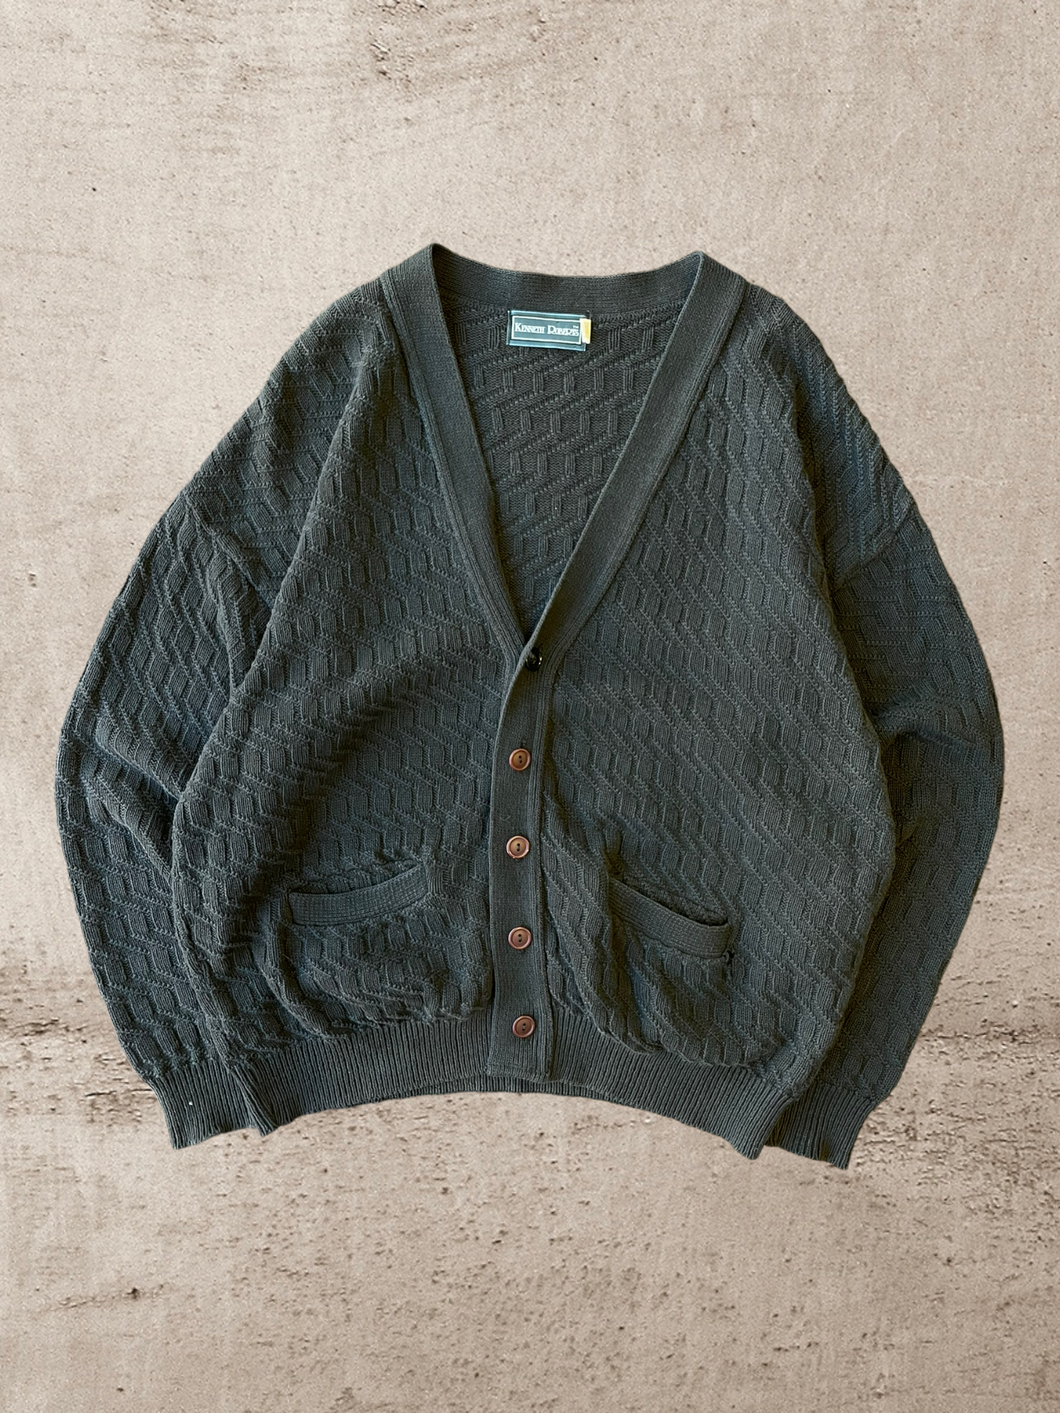 90s Knit Cardigan - Large/X-Large